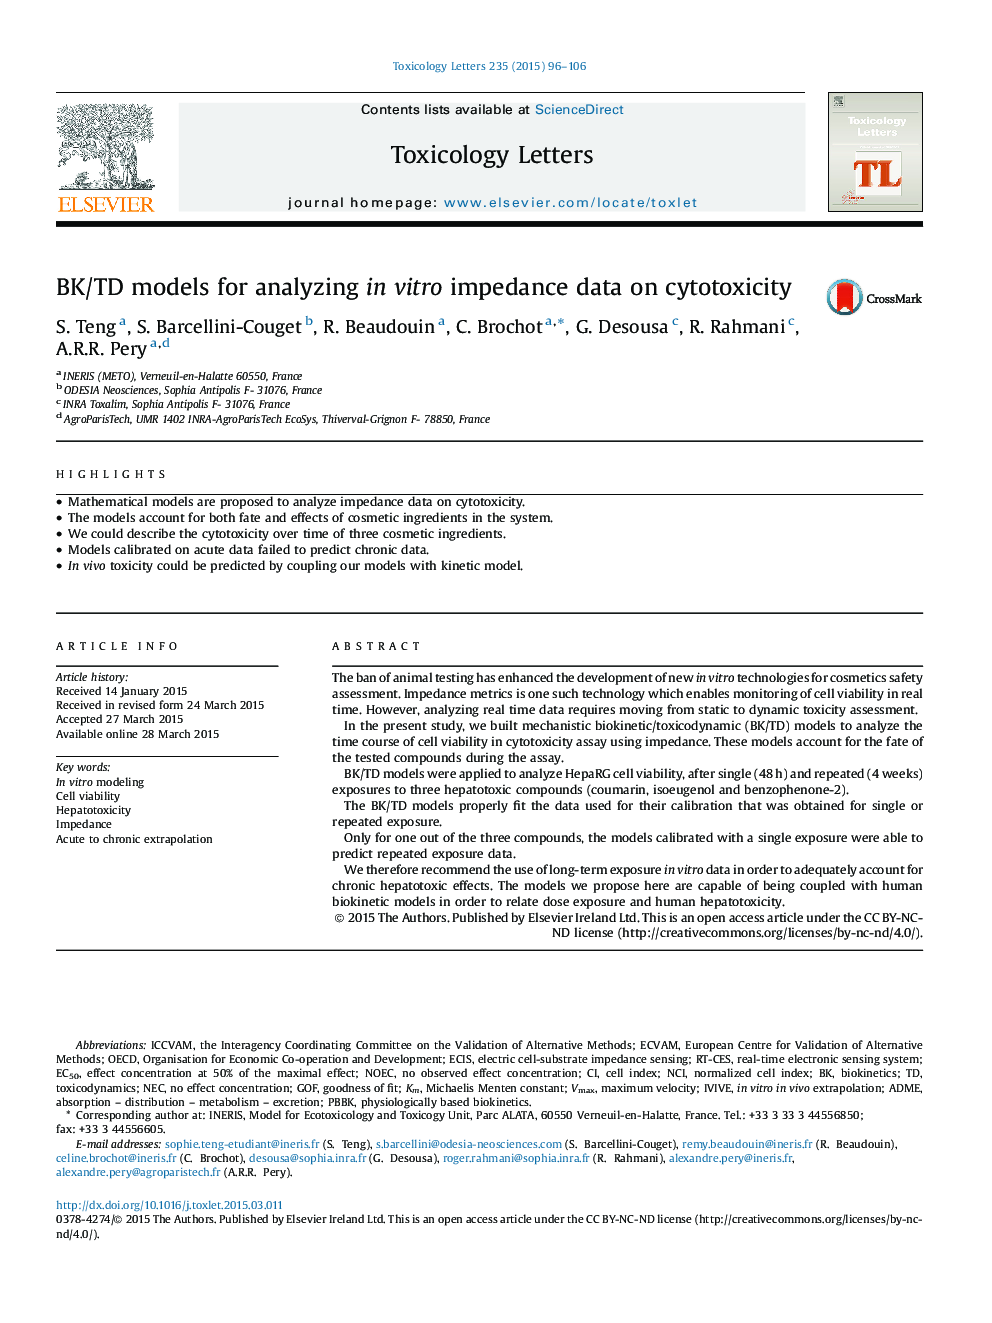 BK/TD models for analyzing in vitro impedance data on cytotoxicity